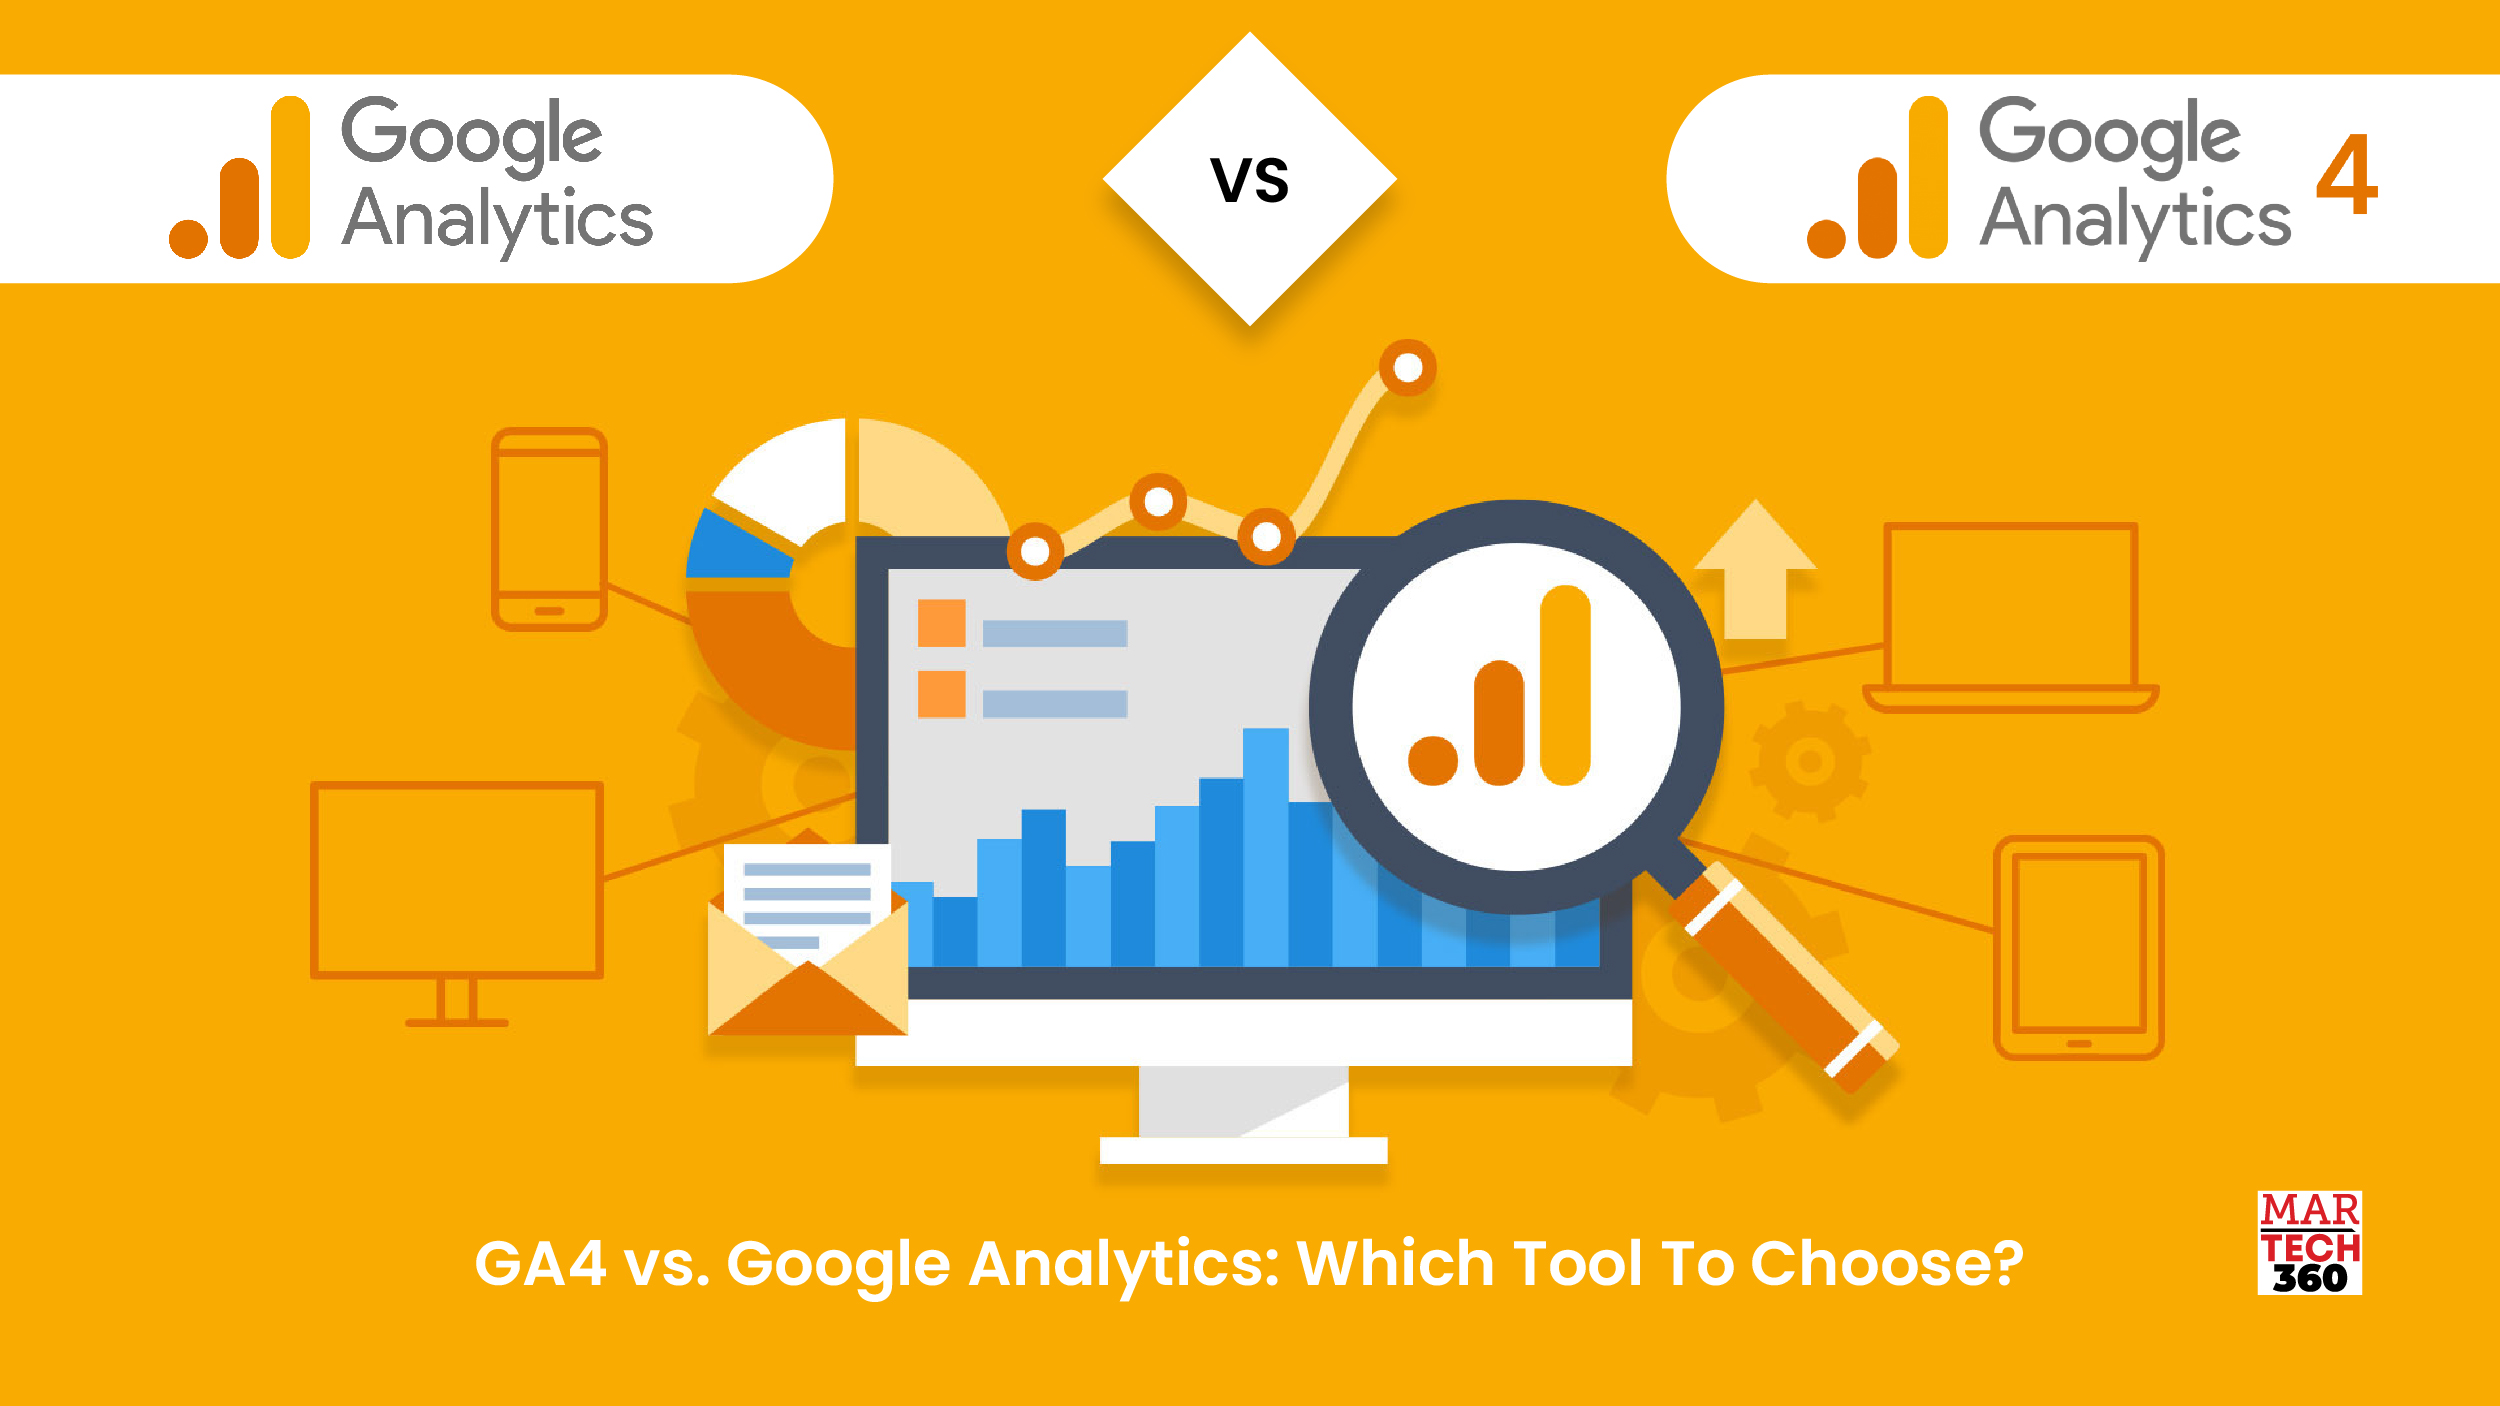 GA4 vs Google Analytics